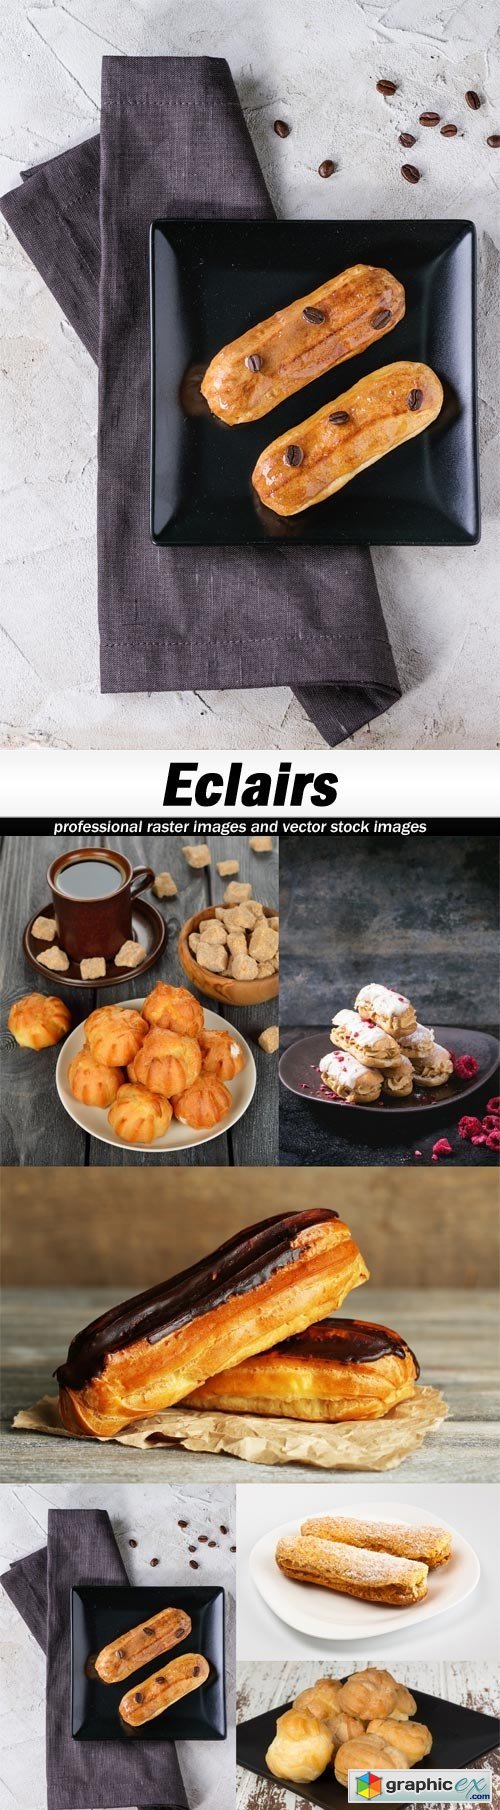 Eclairs-6xJPEGs